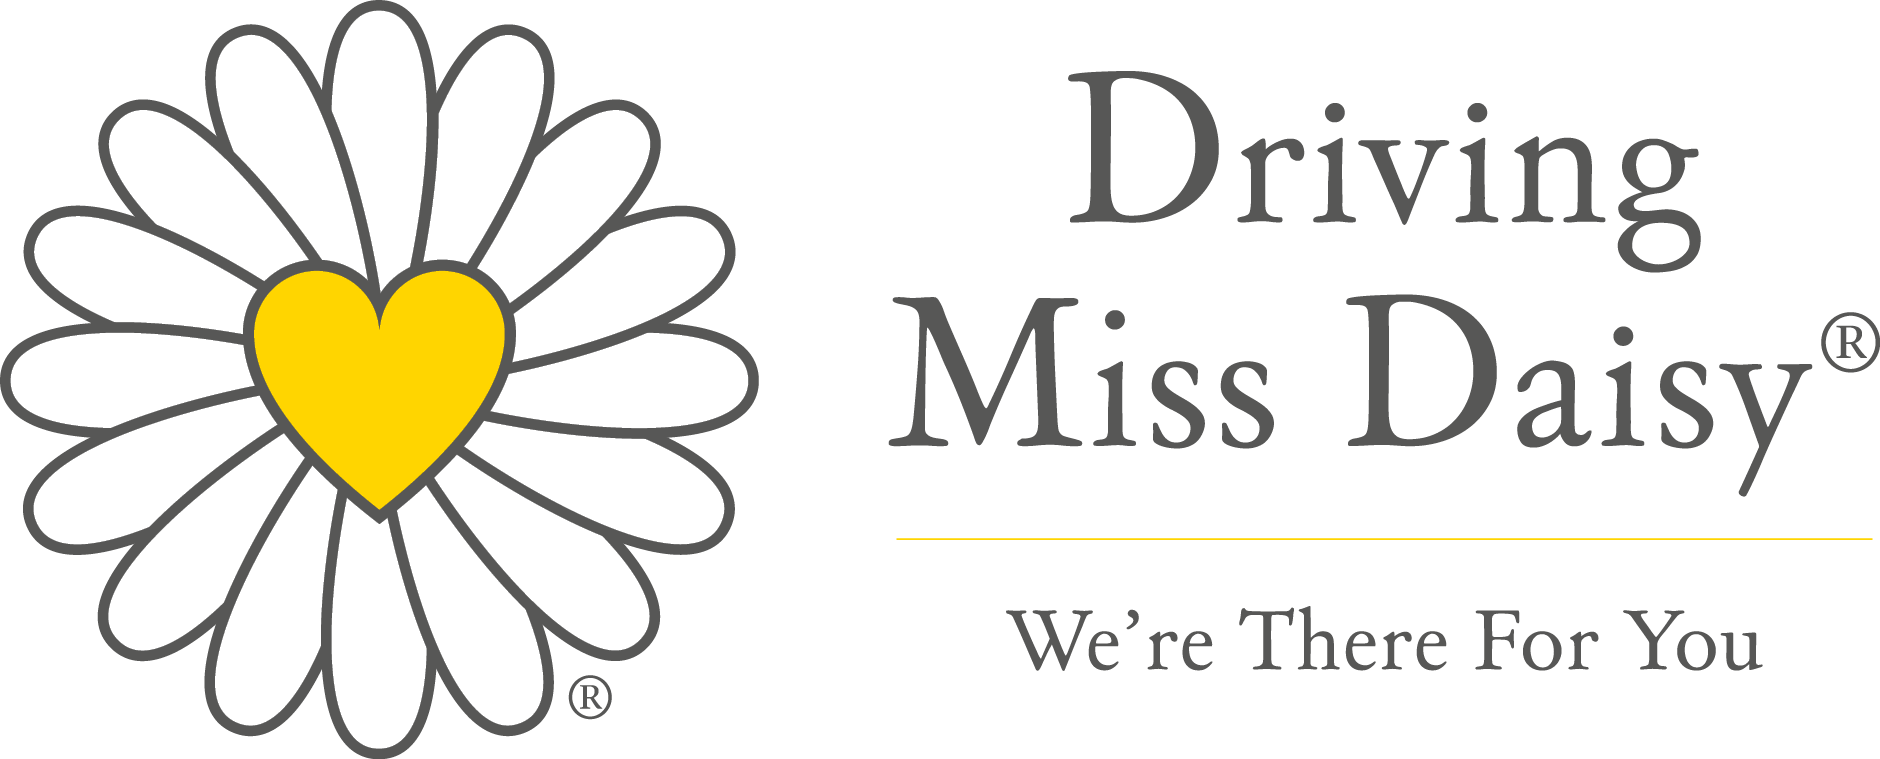 Driving Miss Daisy Stratford on Avon Logo